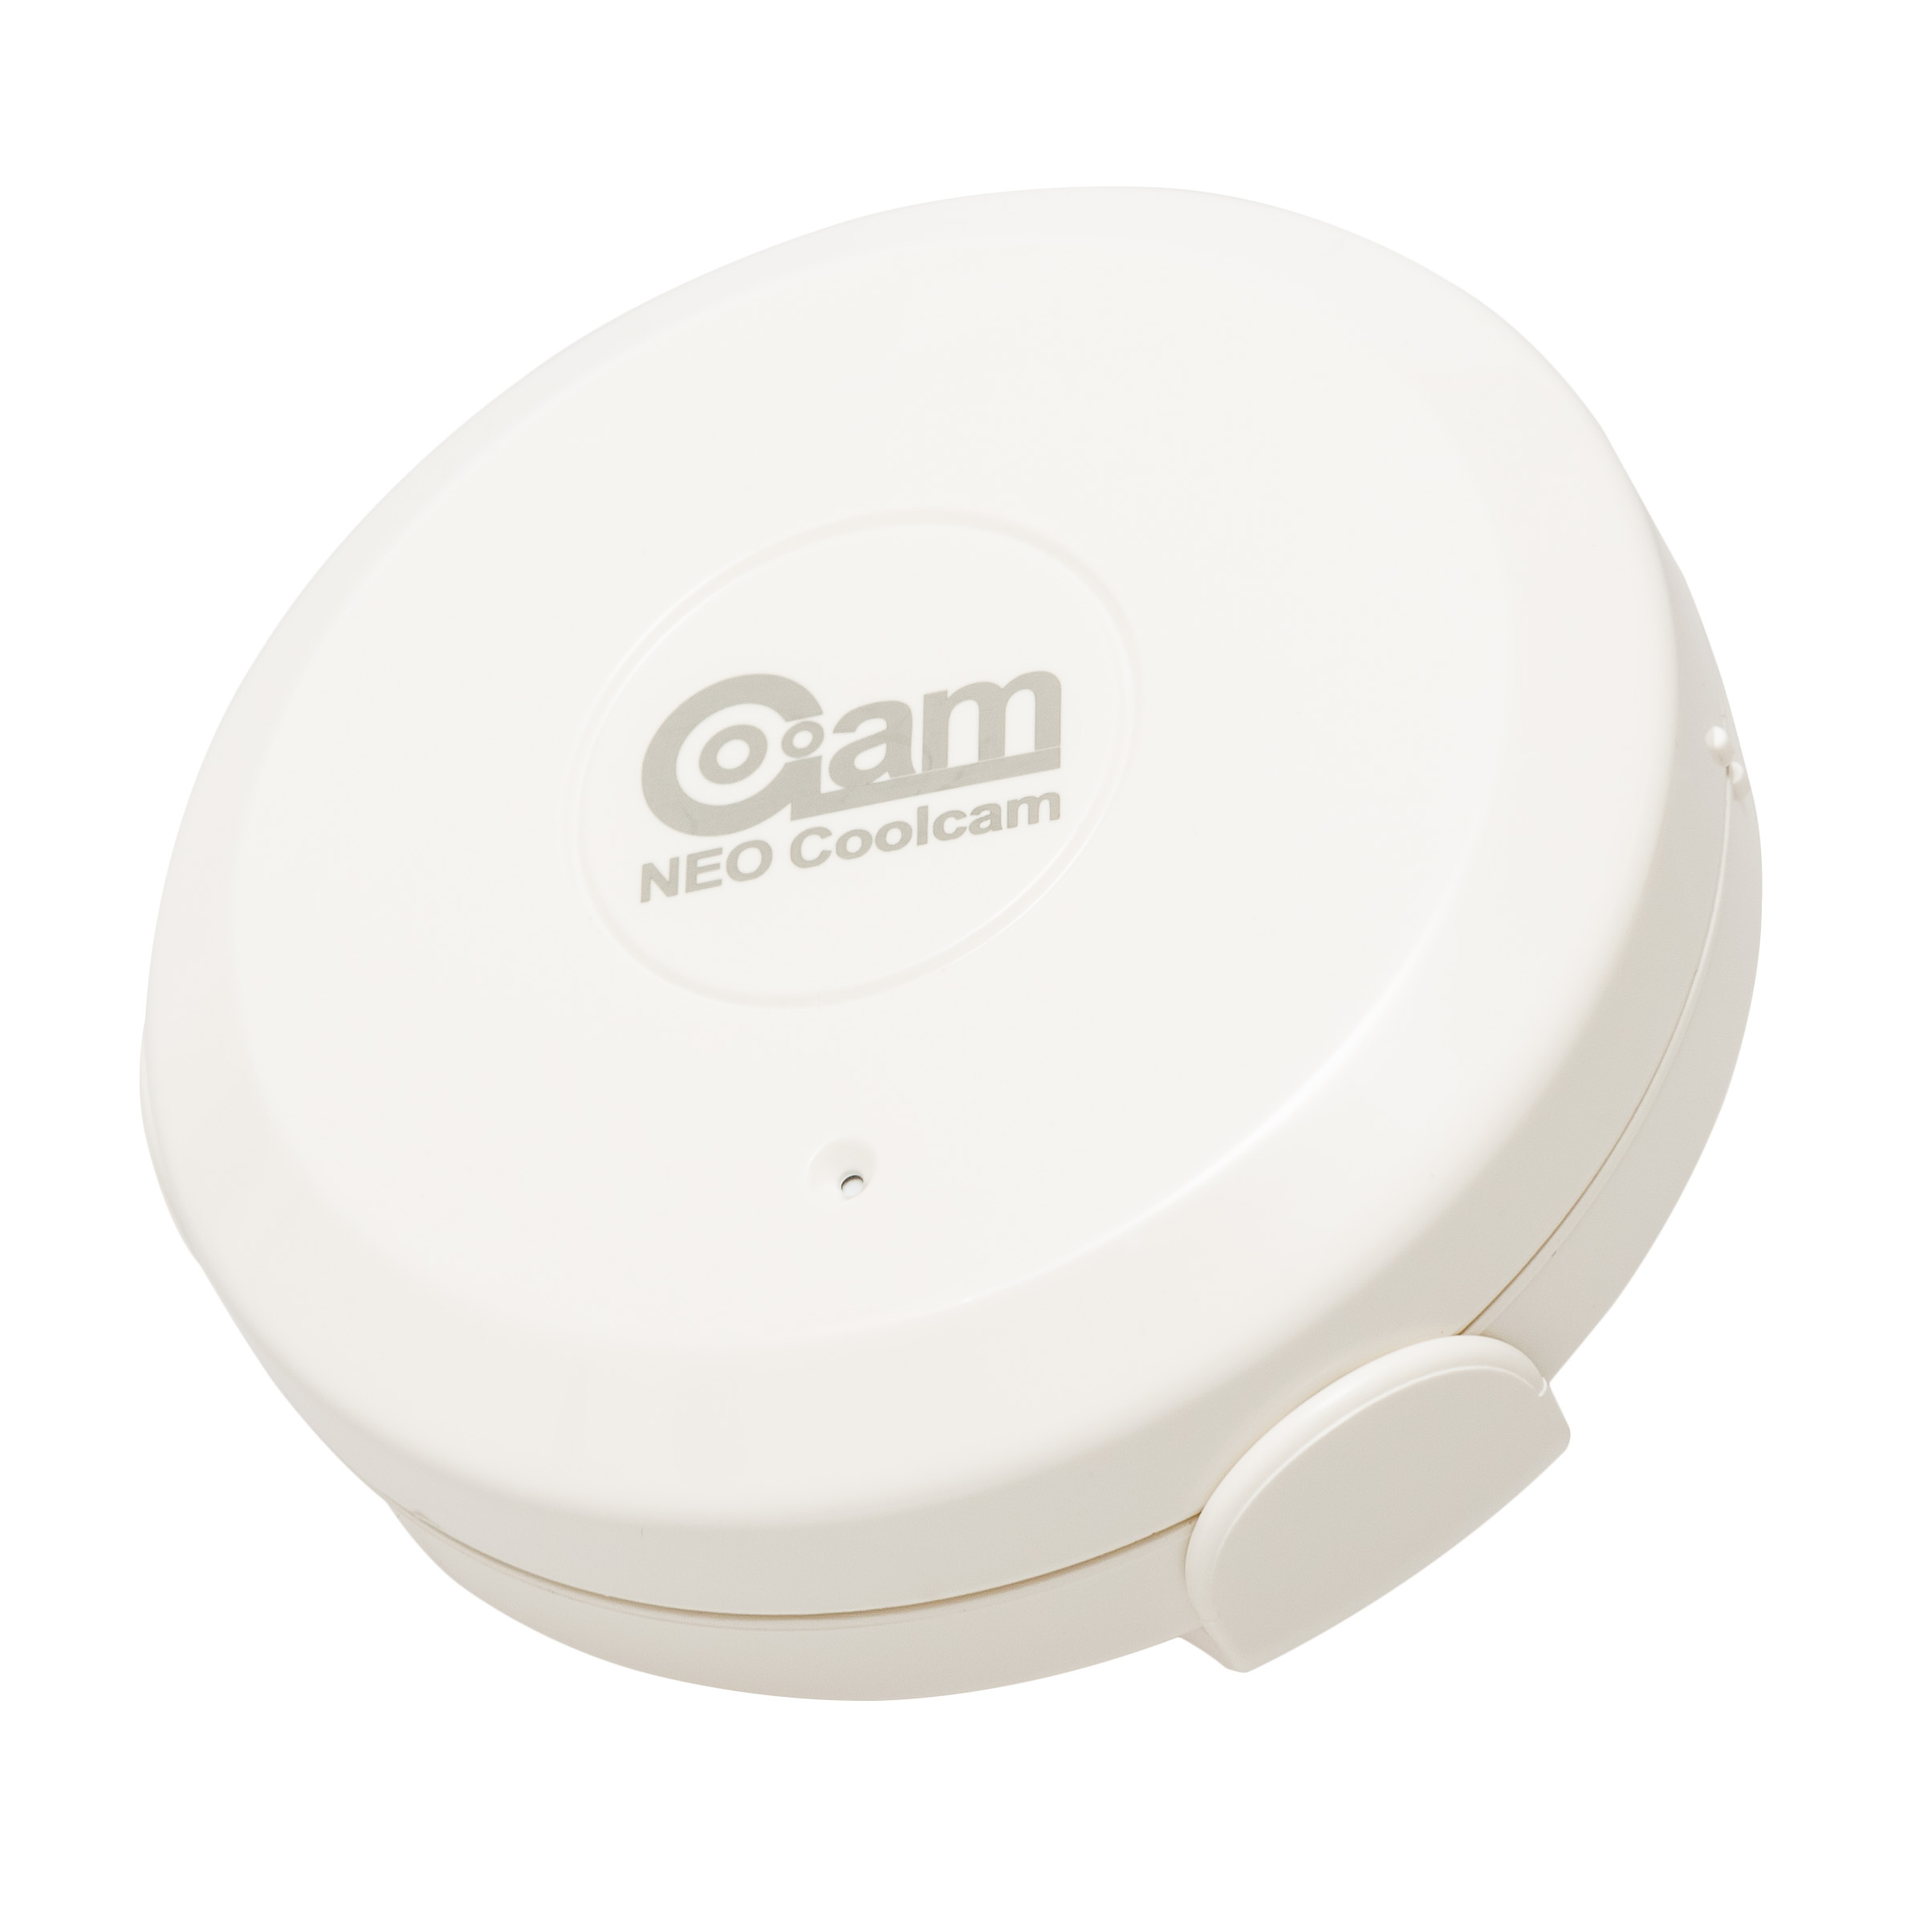 Neo Coolcam Flood Sensor Z-Wave Plus Demo